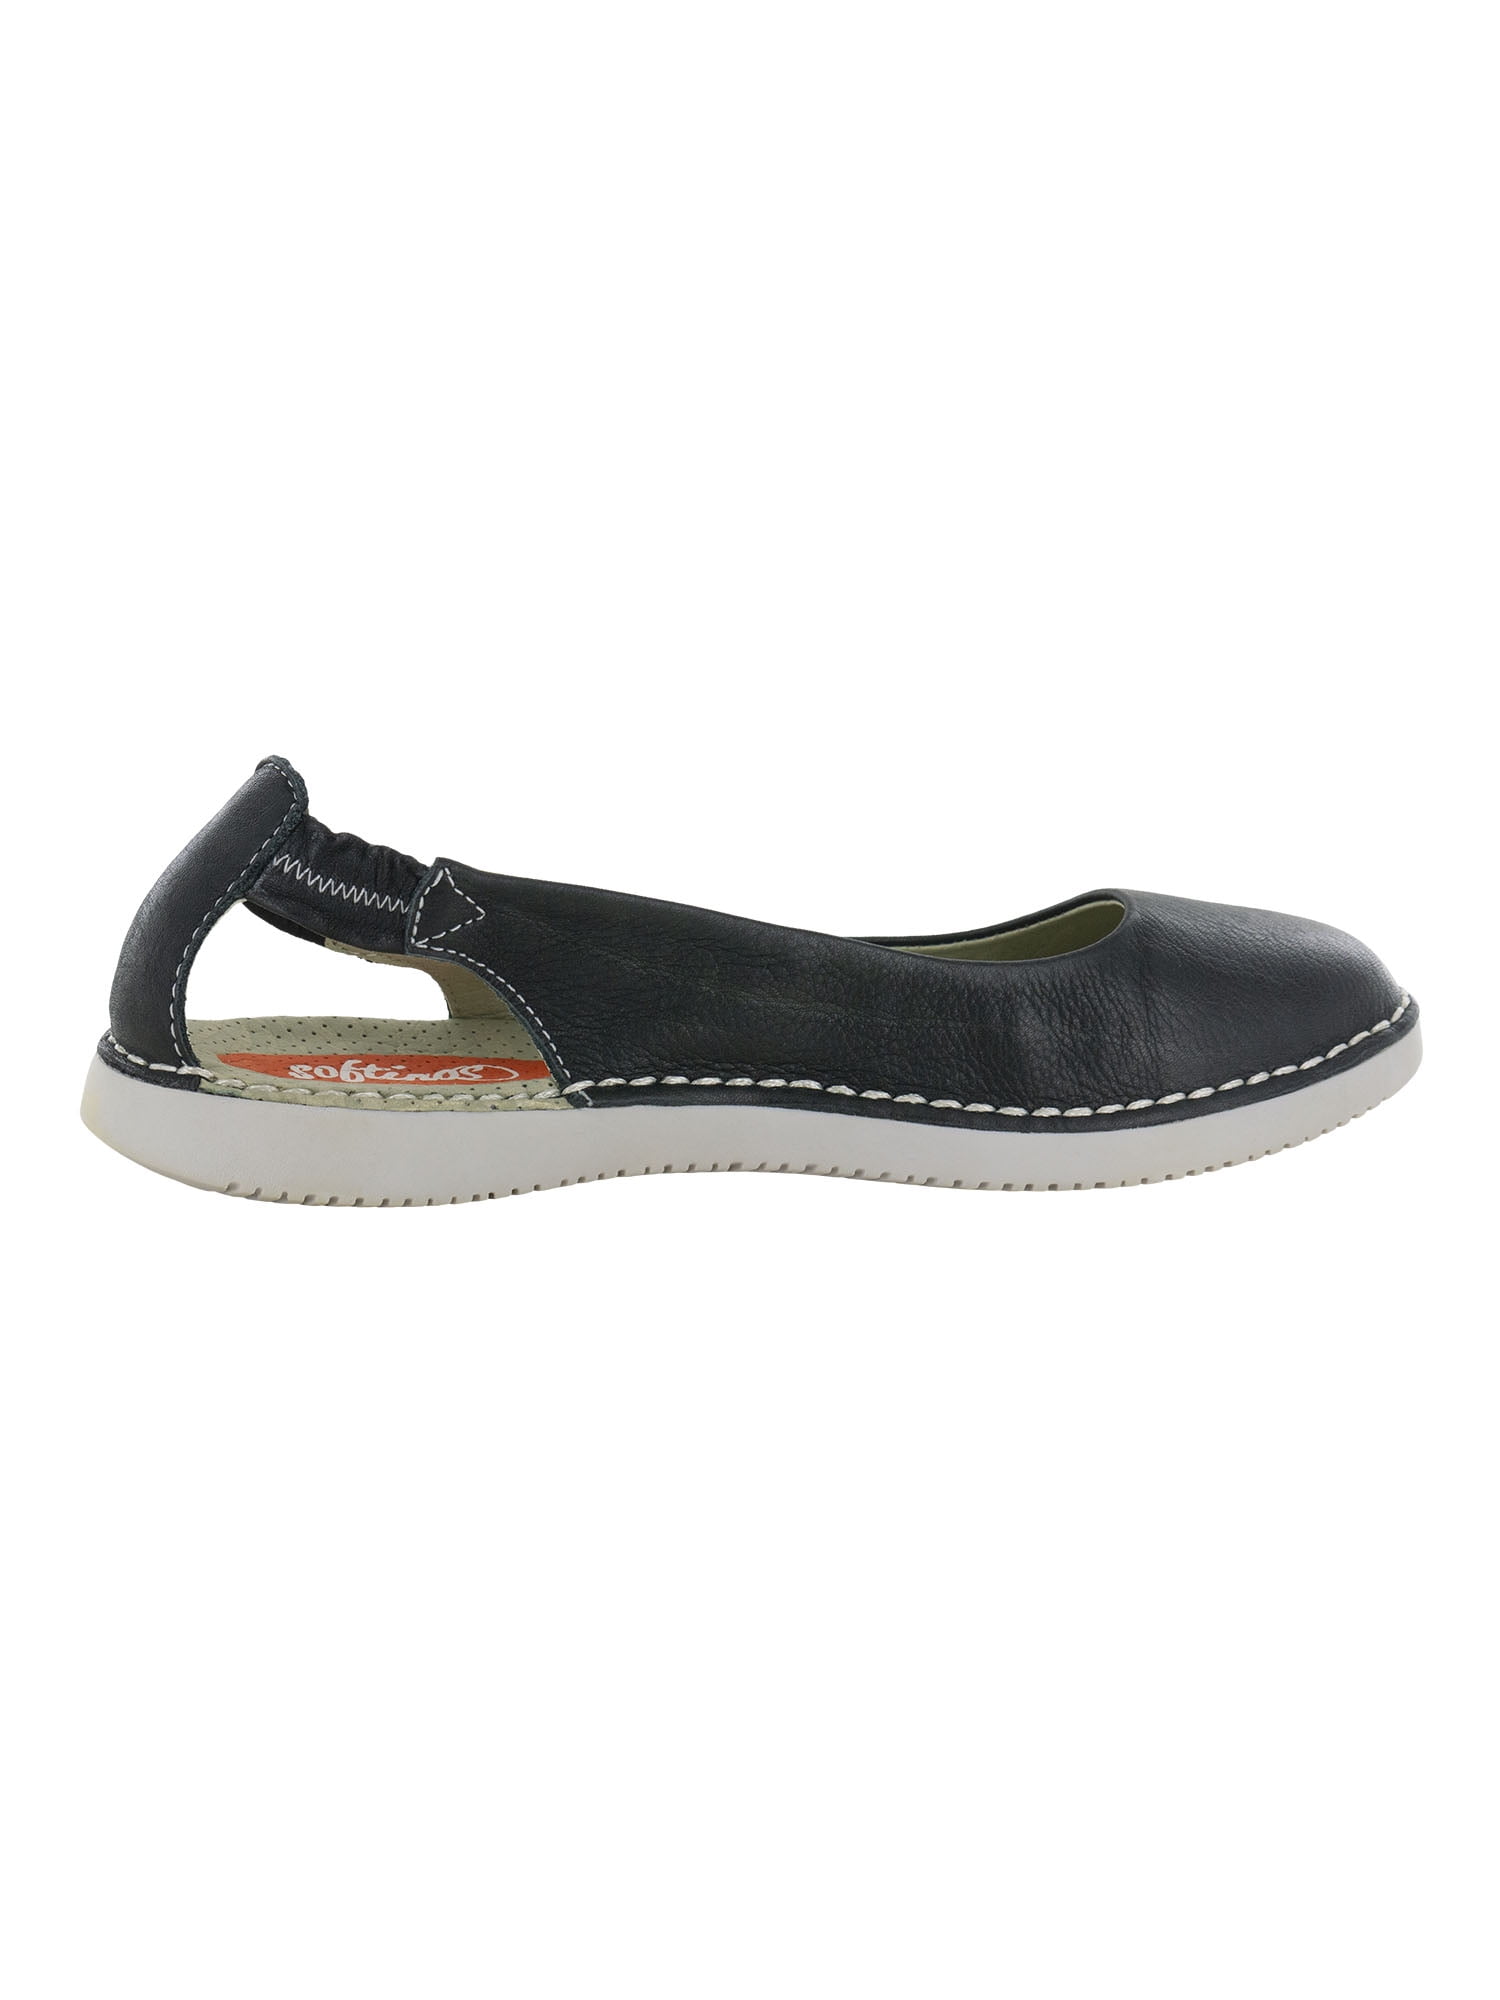 Softinos Womens TOR Leather On Shoes, Black, 37 EU - Walmart.com